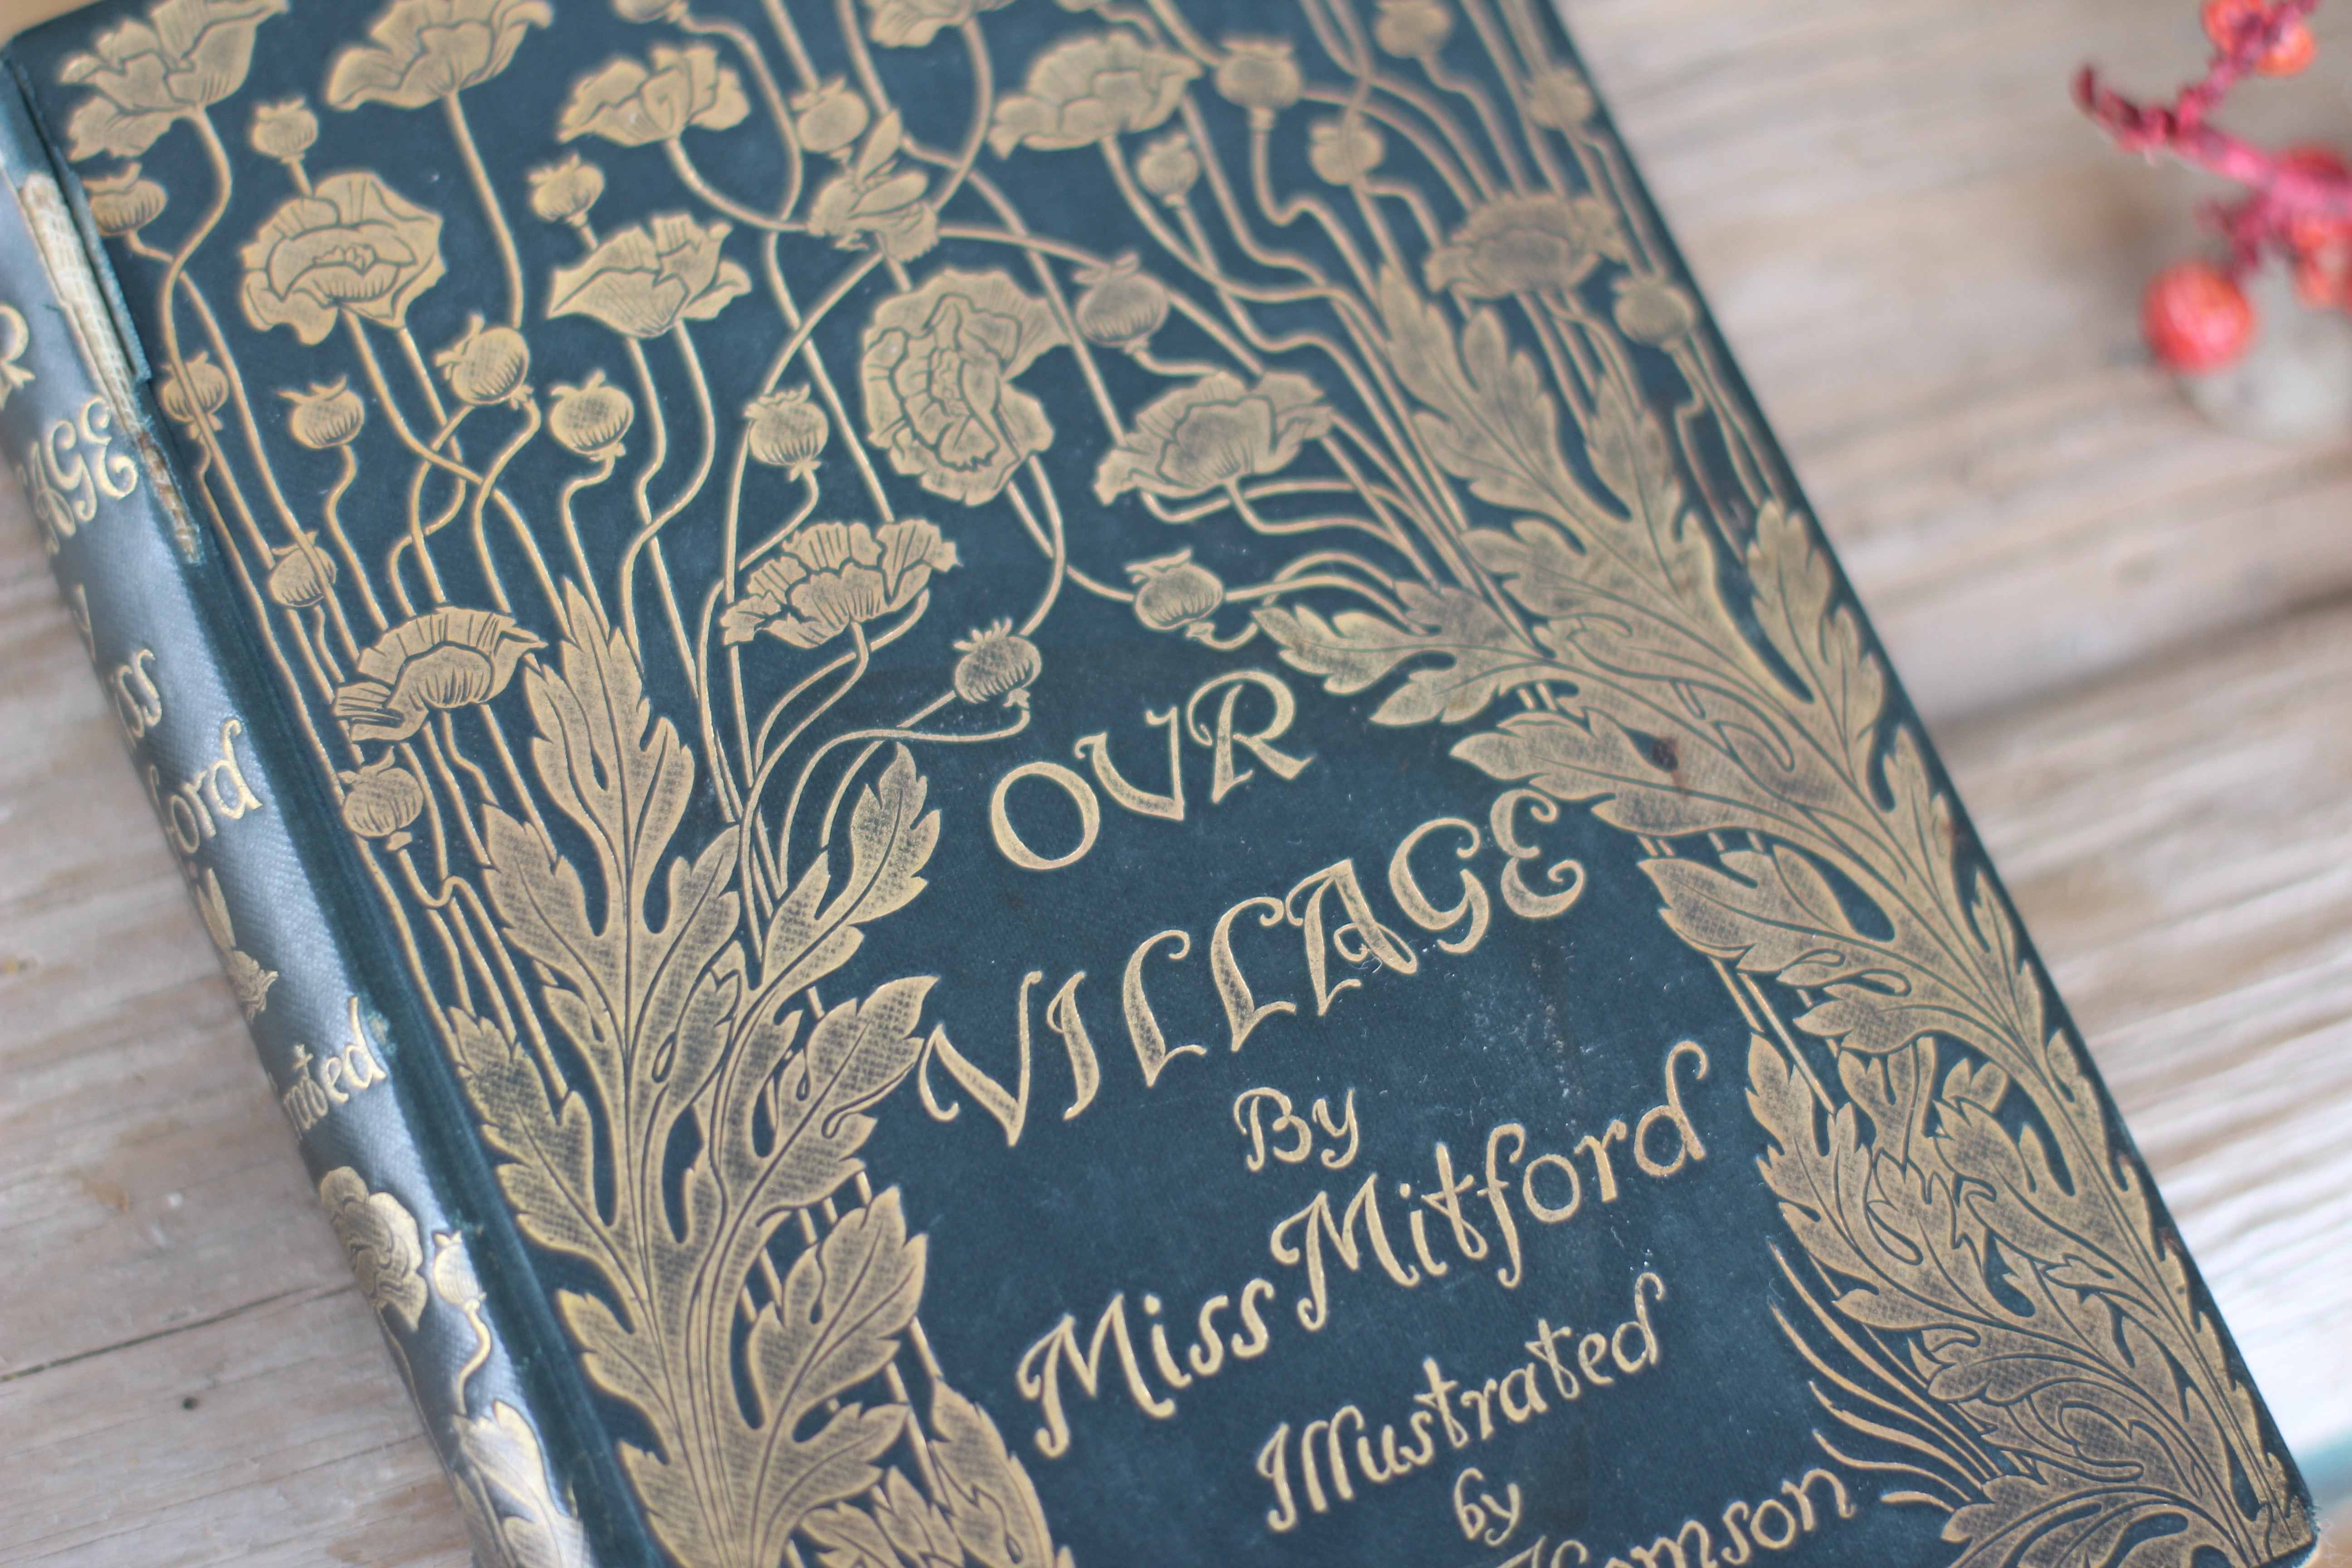 Antique Book, "Our Village" Miss Mitford Macmillan NY 1893 Hardback.